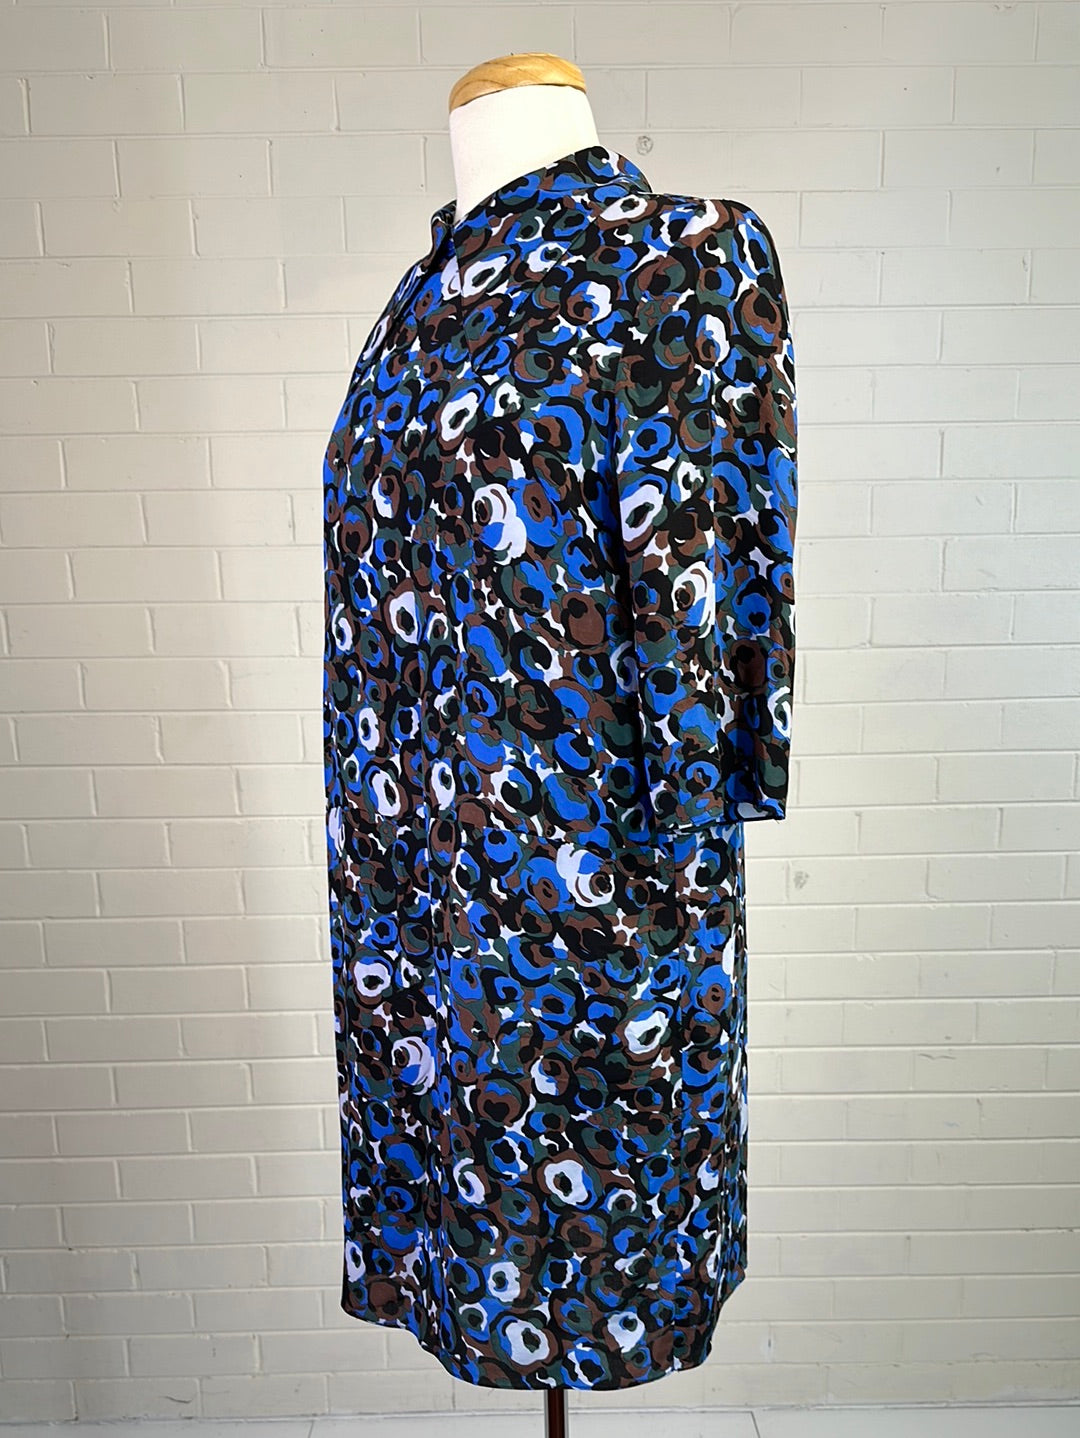 Marni | New York | dress | size 10 | knee length | 100% silk | made in Italy